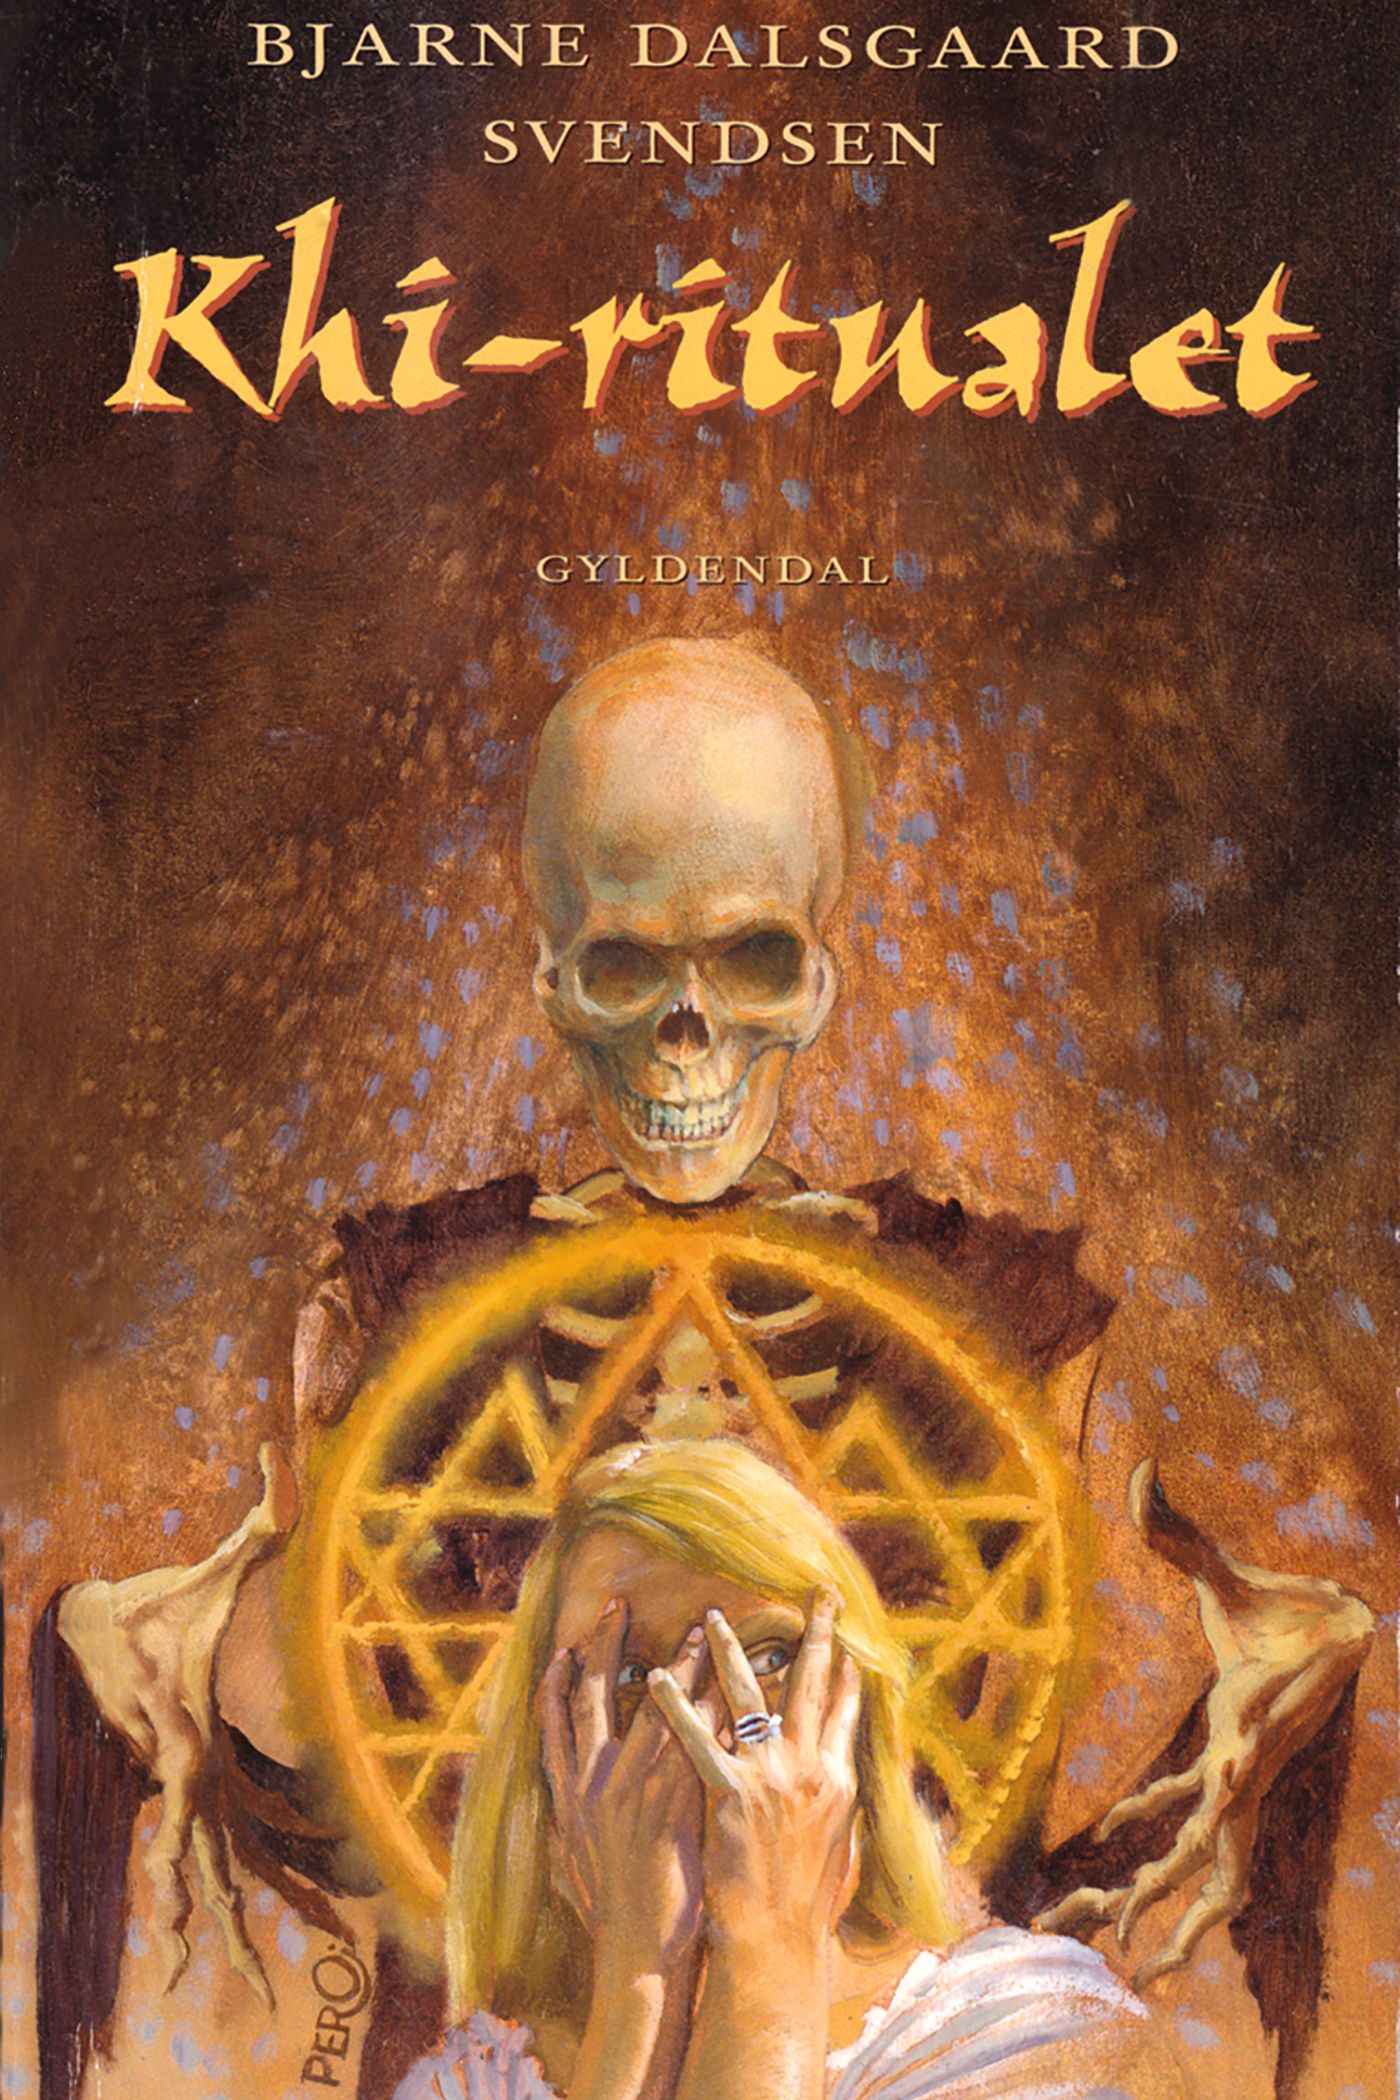 Khi-ritualet, eBook by Bjarne Dalsgaard Svendsen